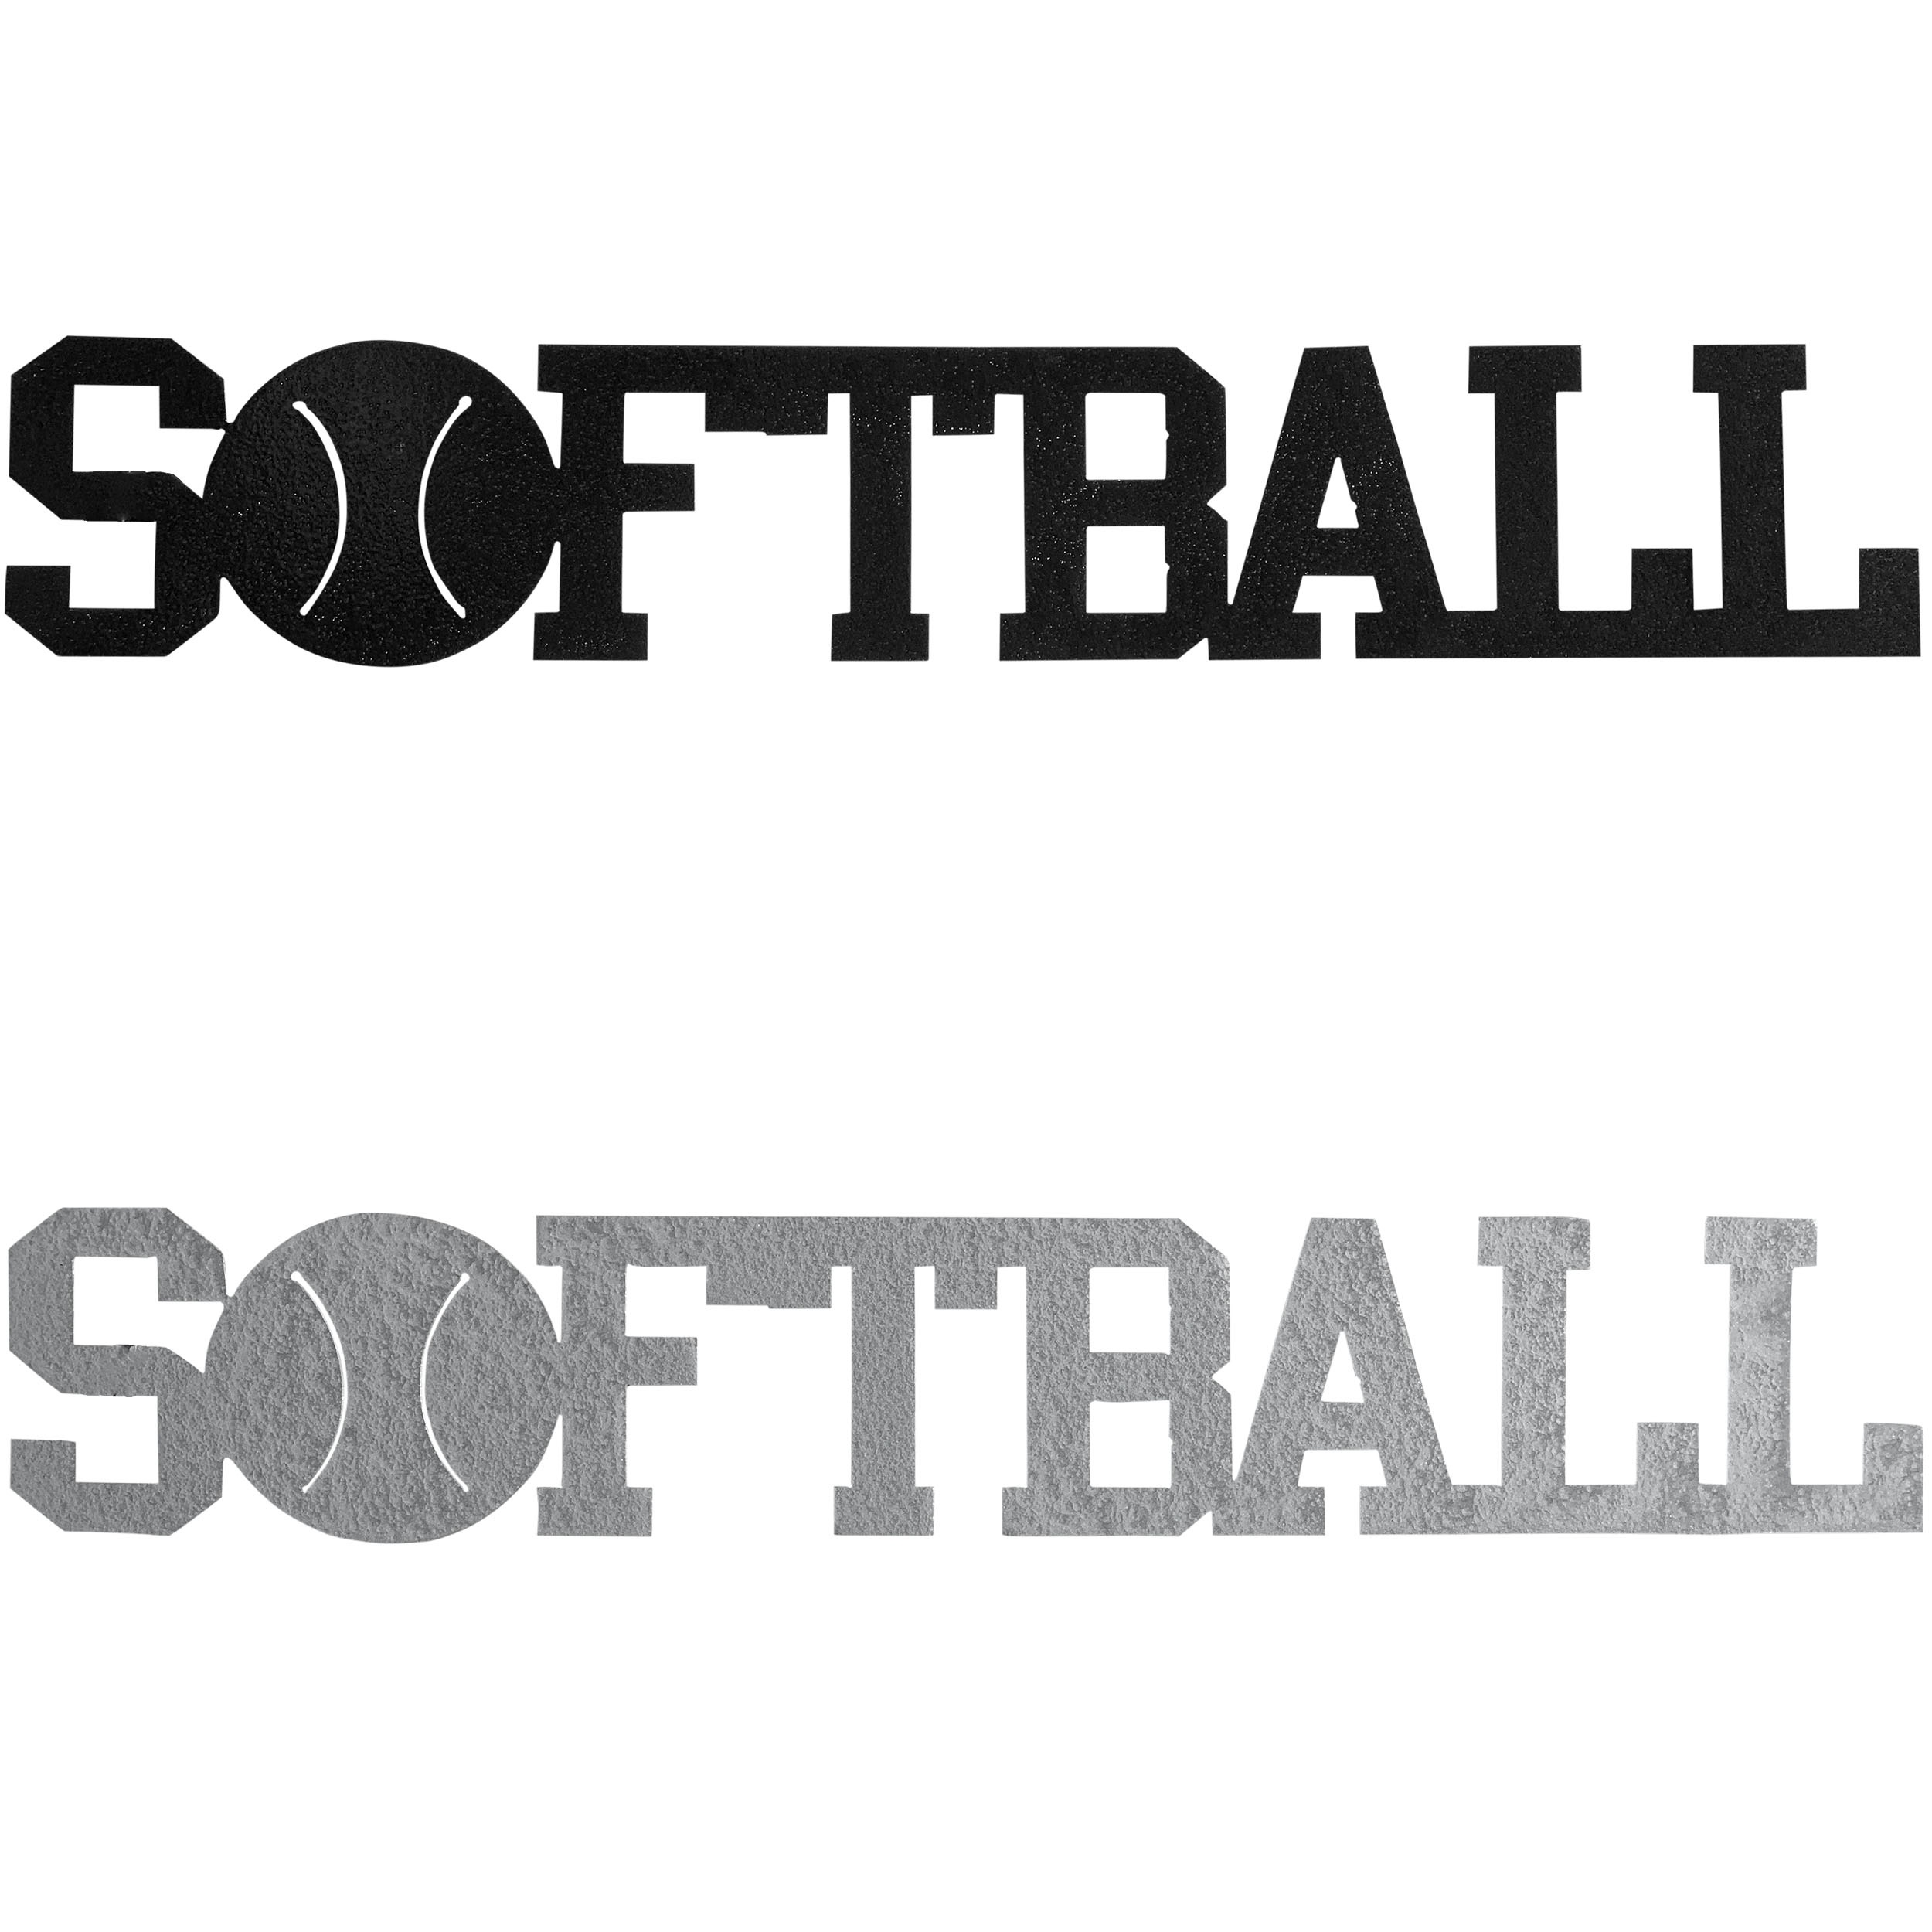 Softball Word by Dugout Creek Designs